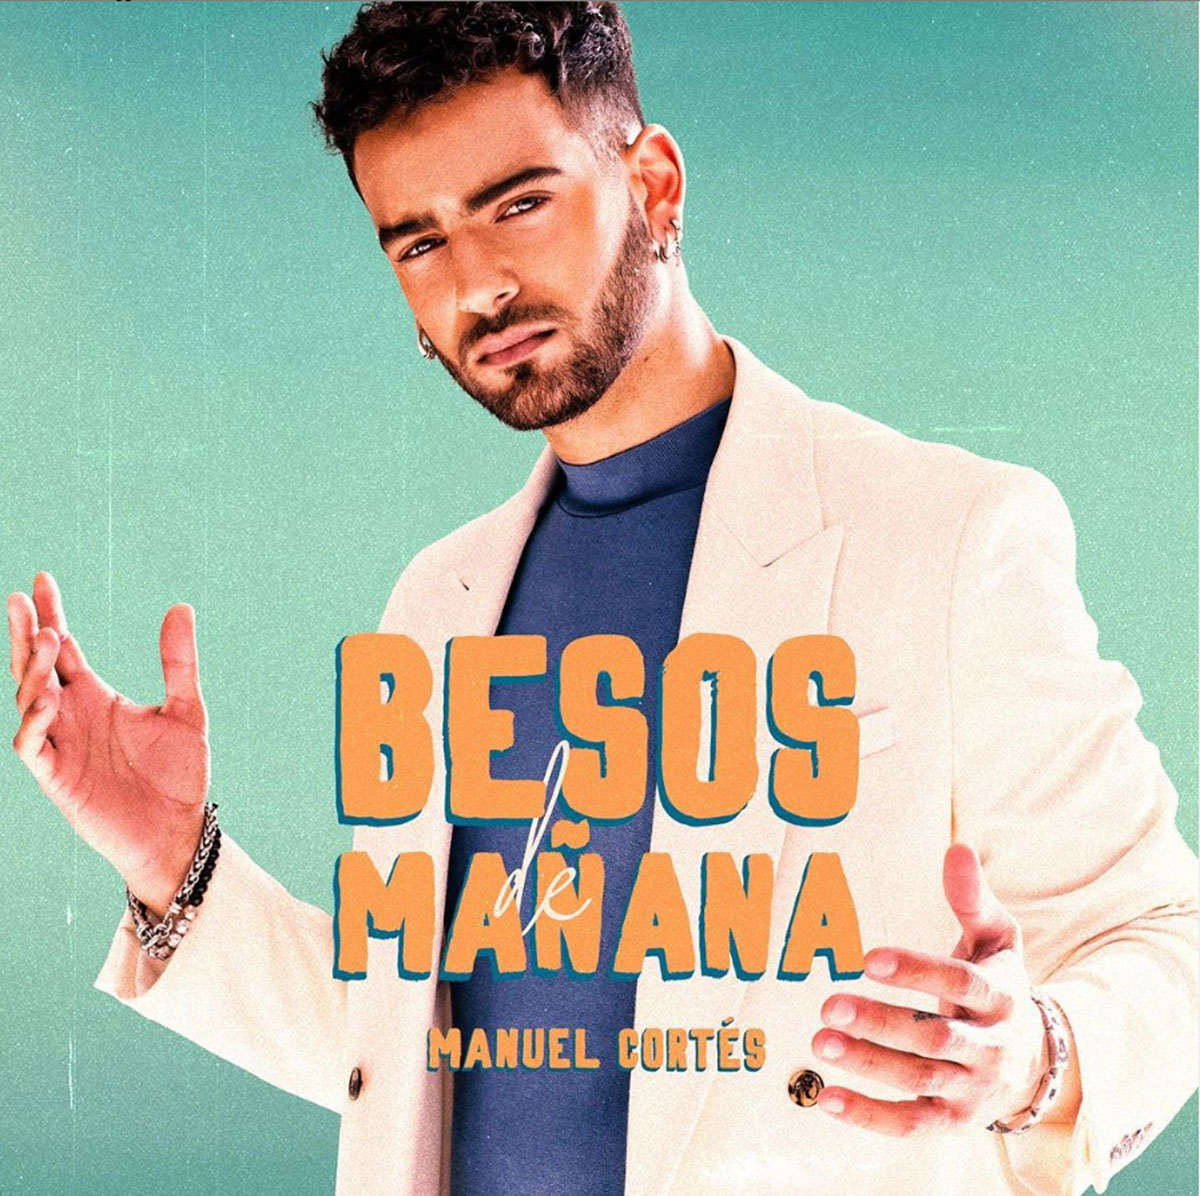 Manuel-Cortés-2